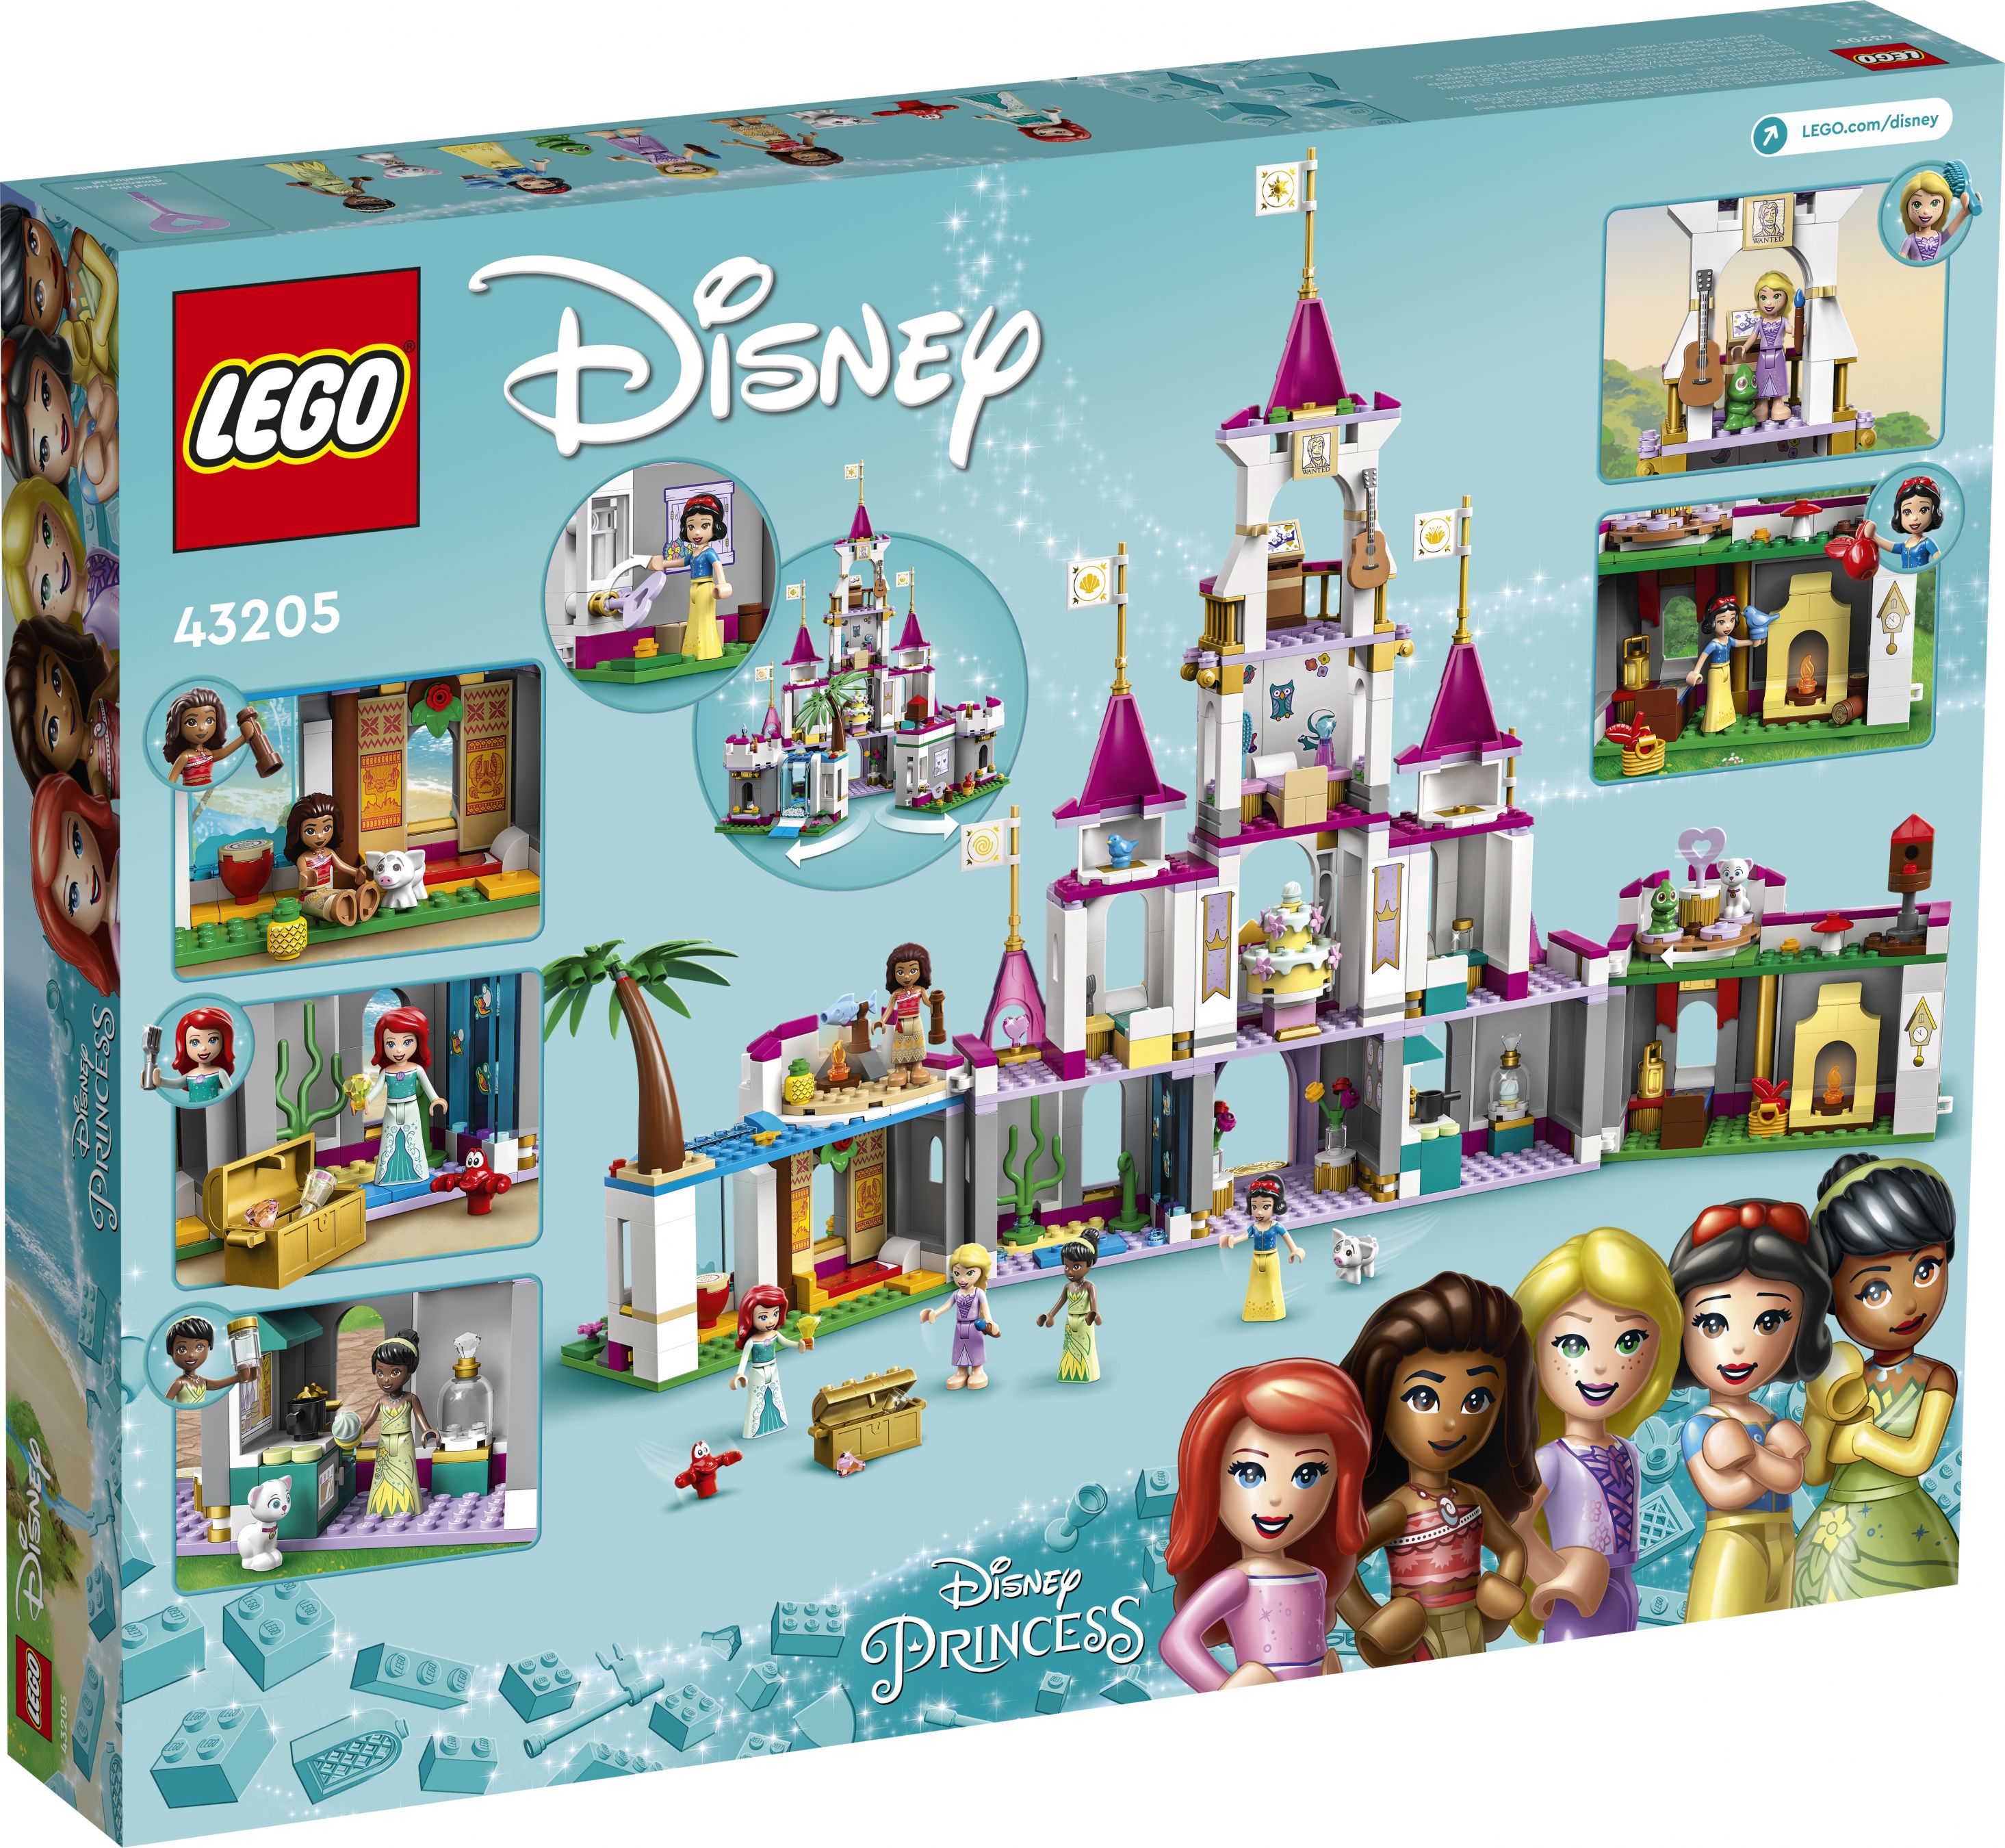 LEGO Disney 43205 Ultimatives Abenteuerschloss LEGO_43205_Box5_v39.jpg